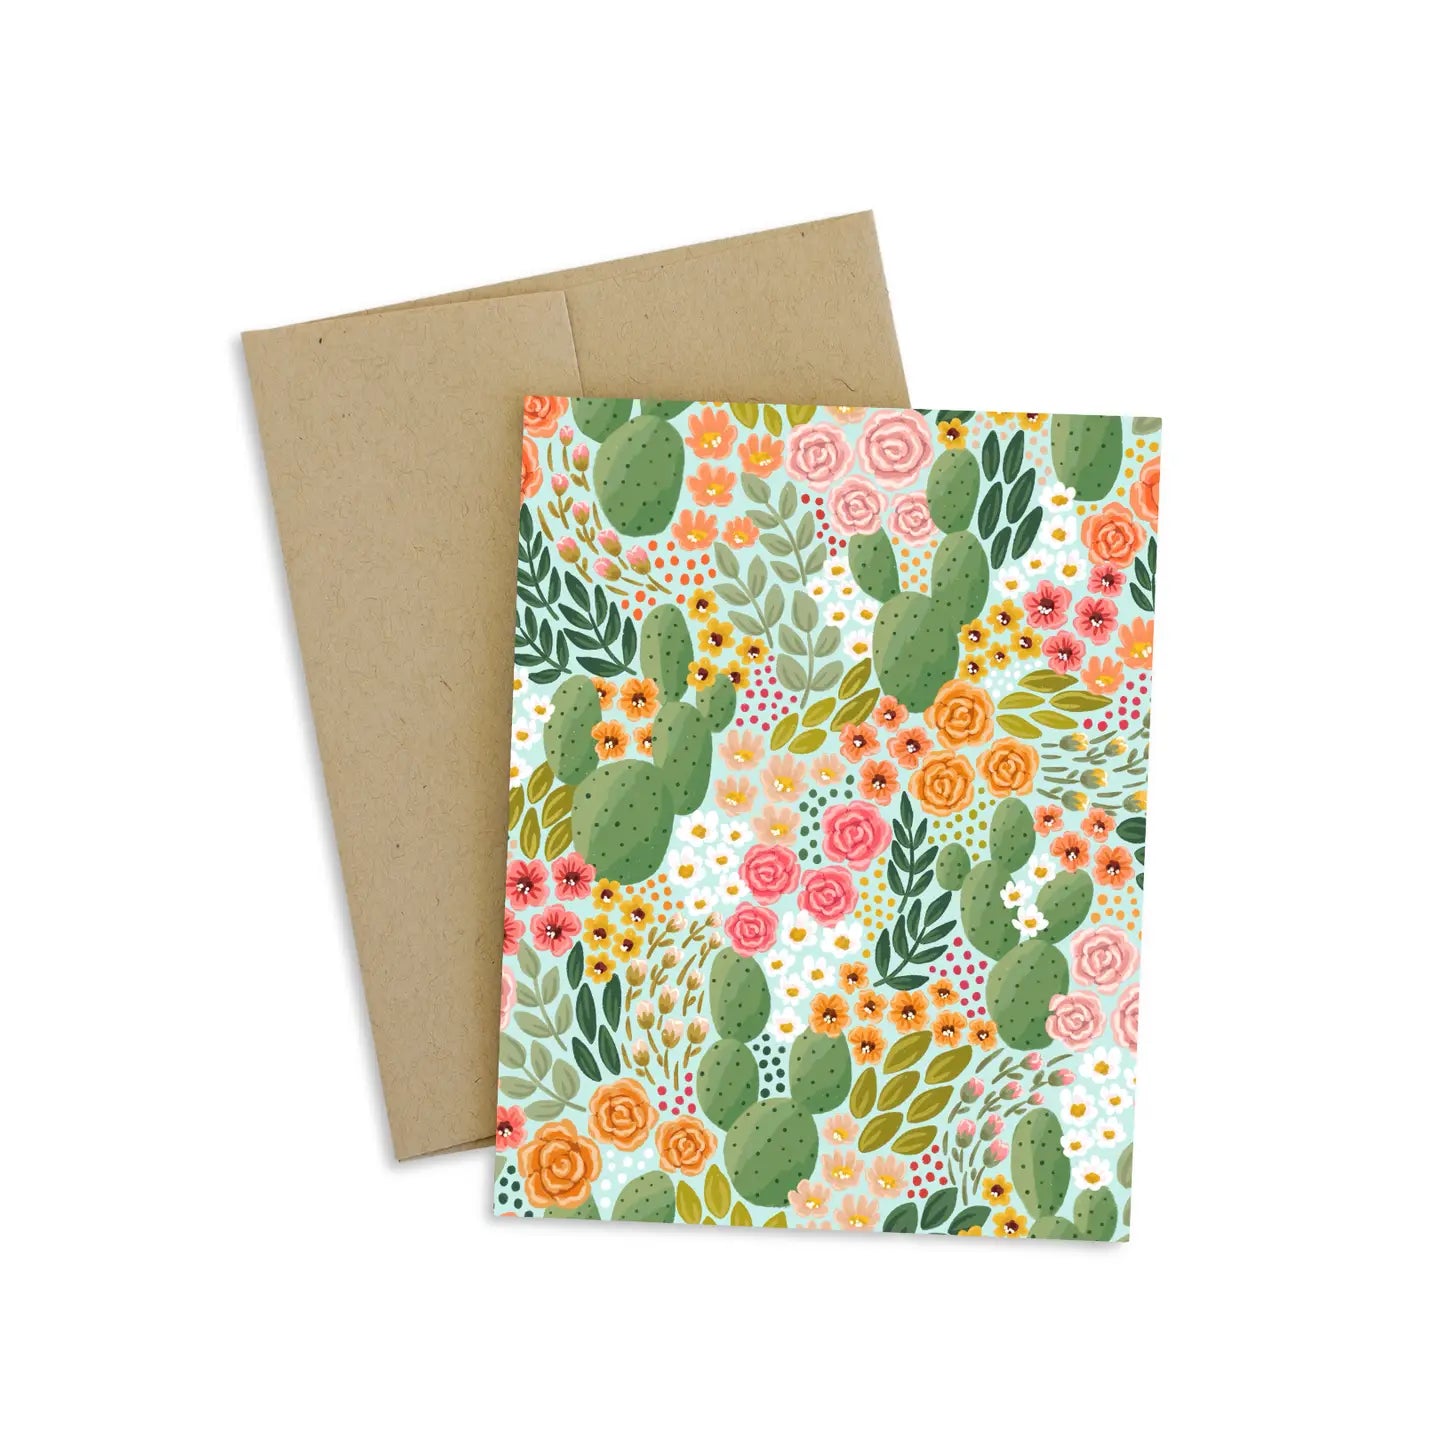 Elyse Breanne Design - Cactus Blooms Greeting Card